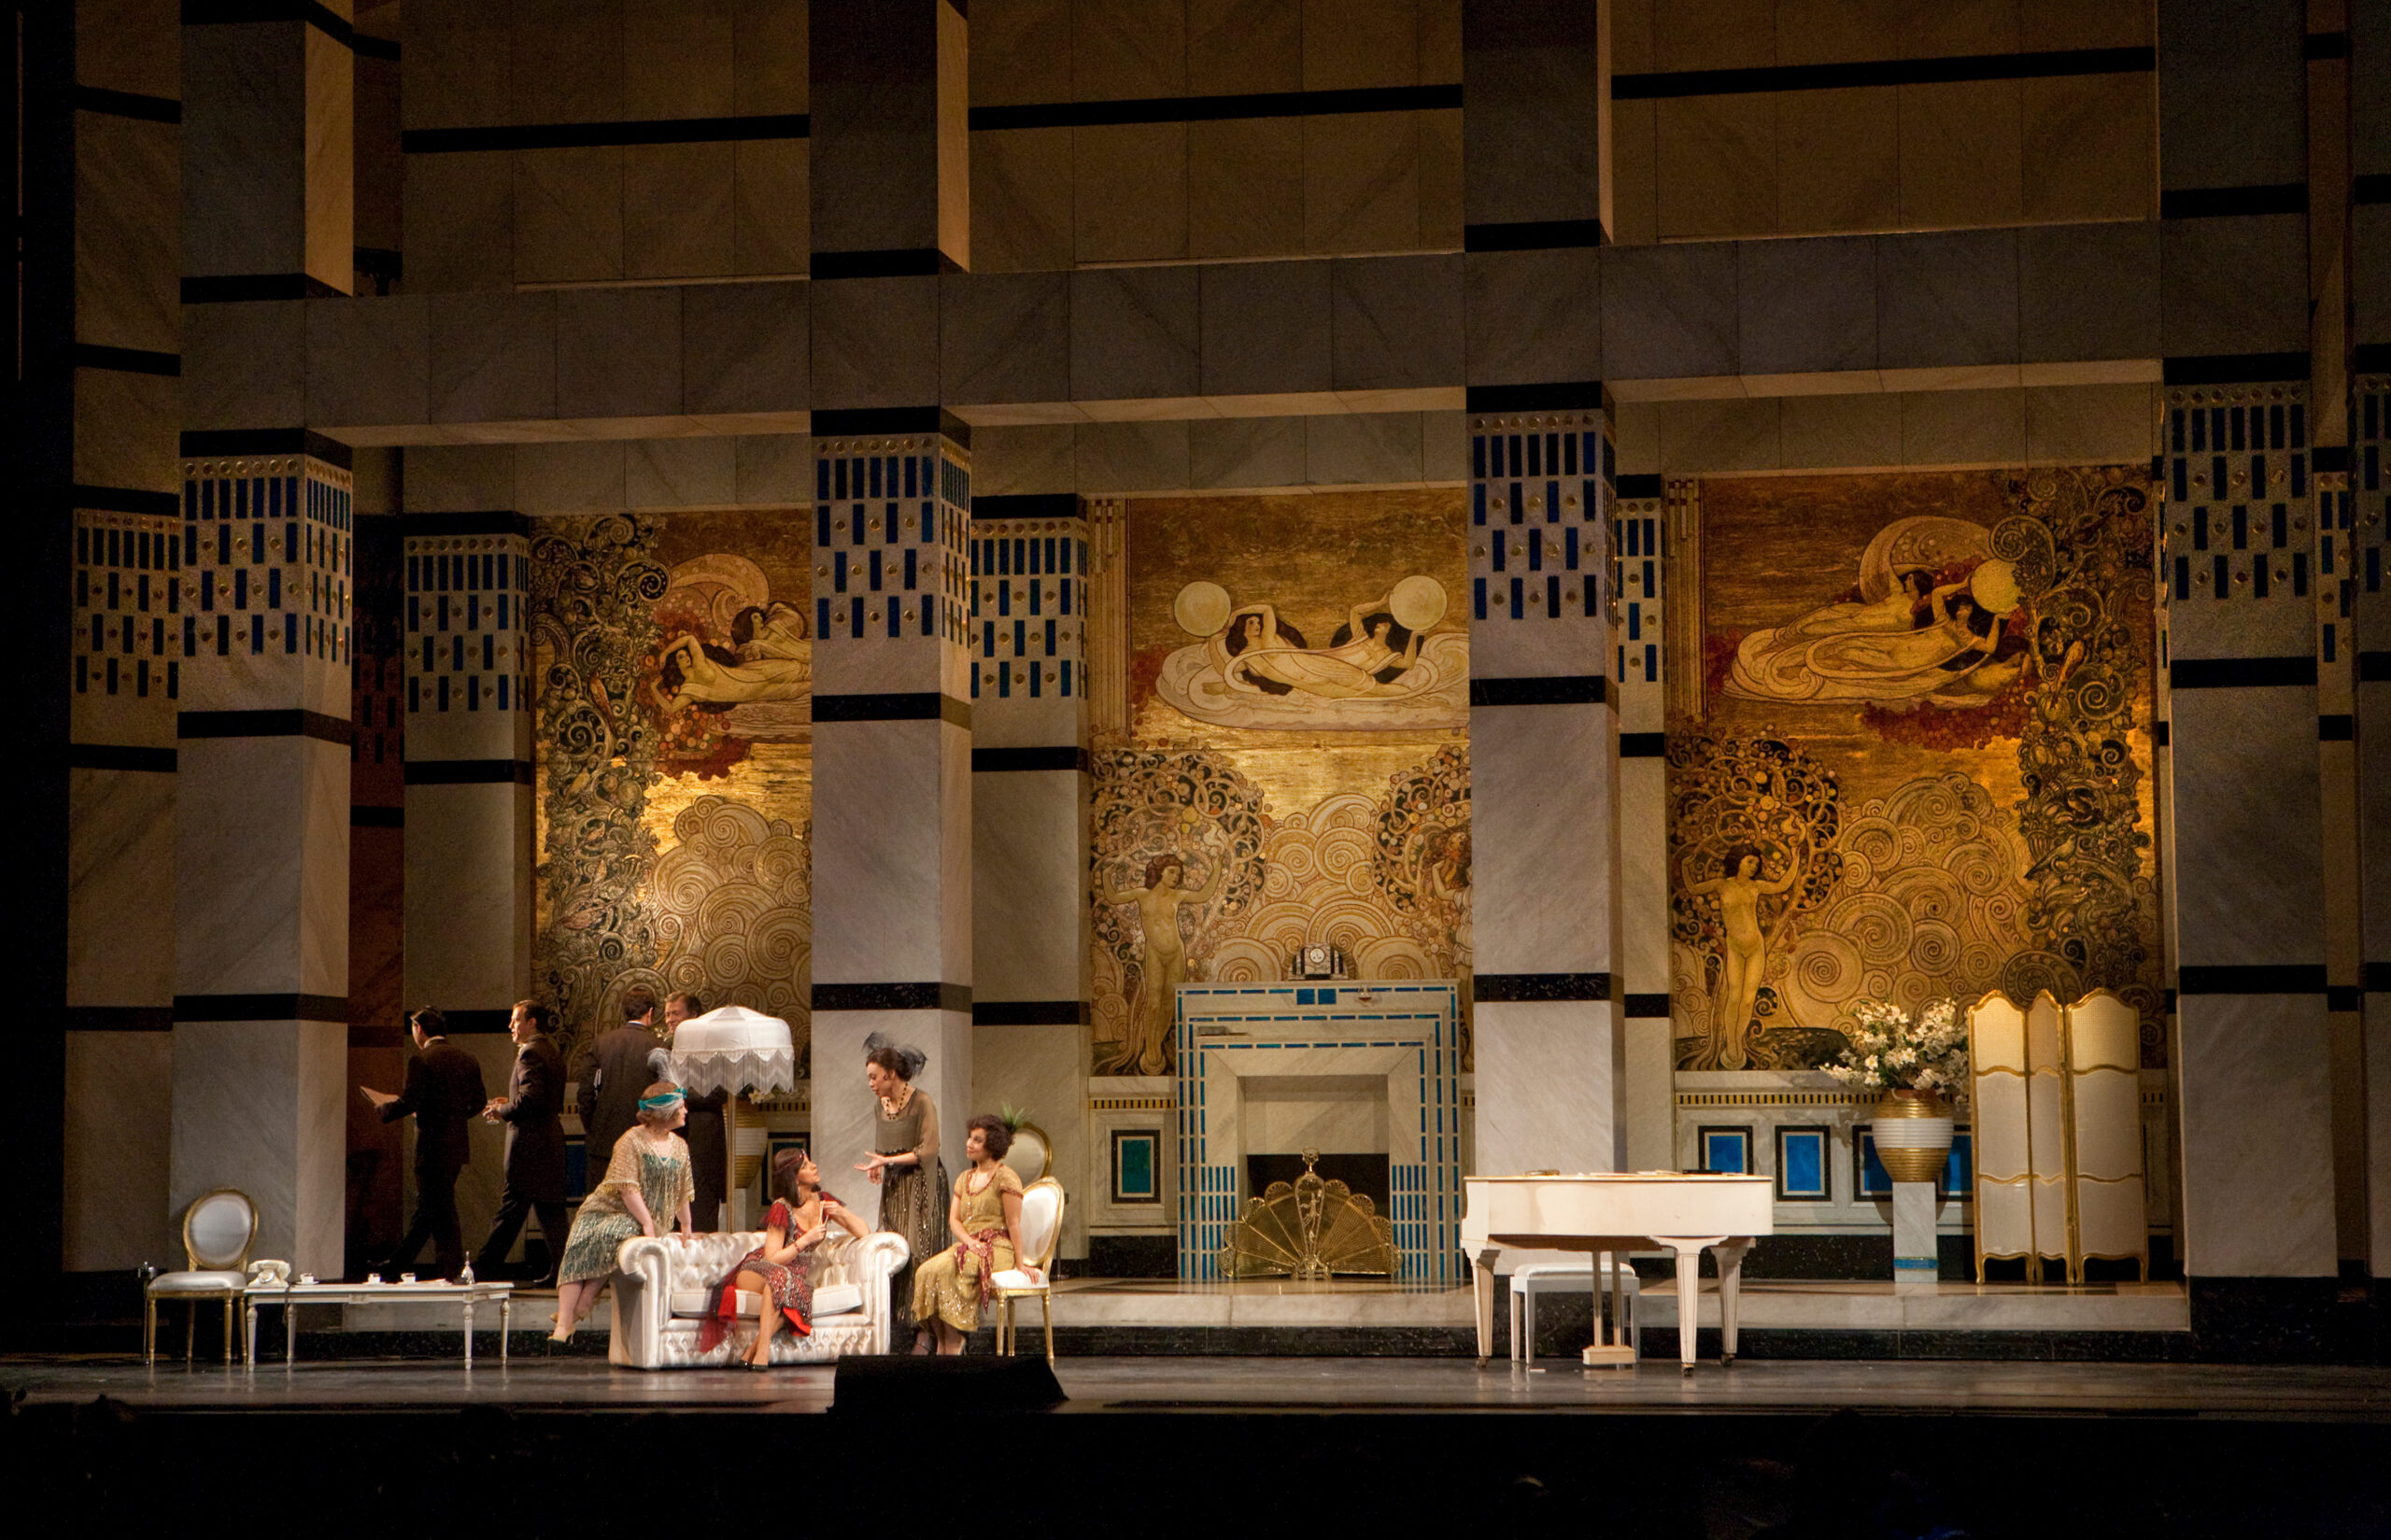 Szene aus Puccinis Oper "La rondine" an der Metropolitan Opera New York